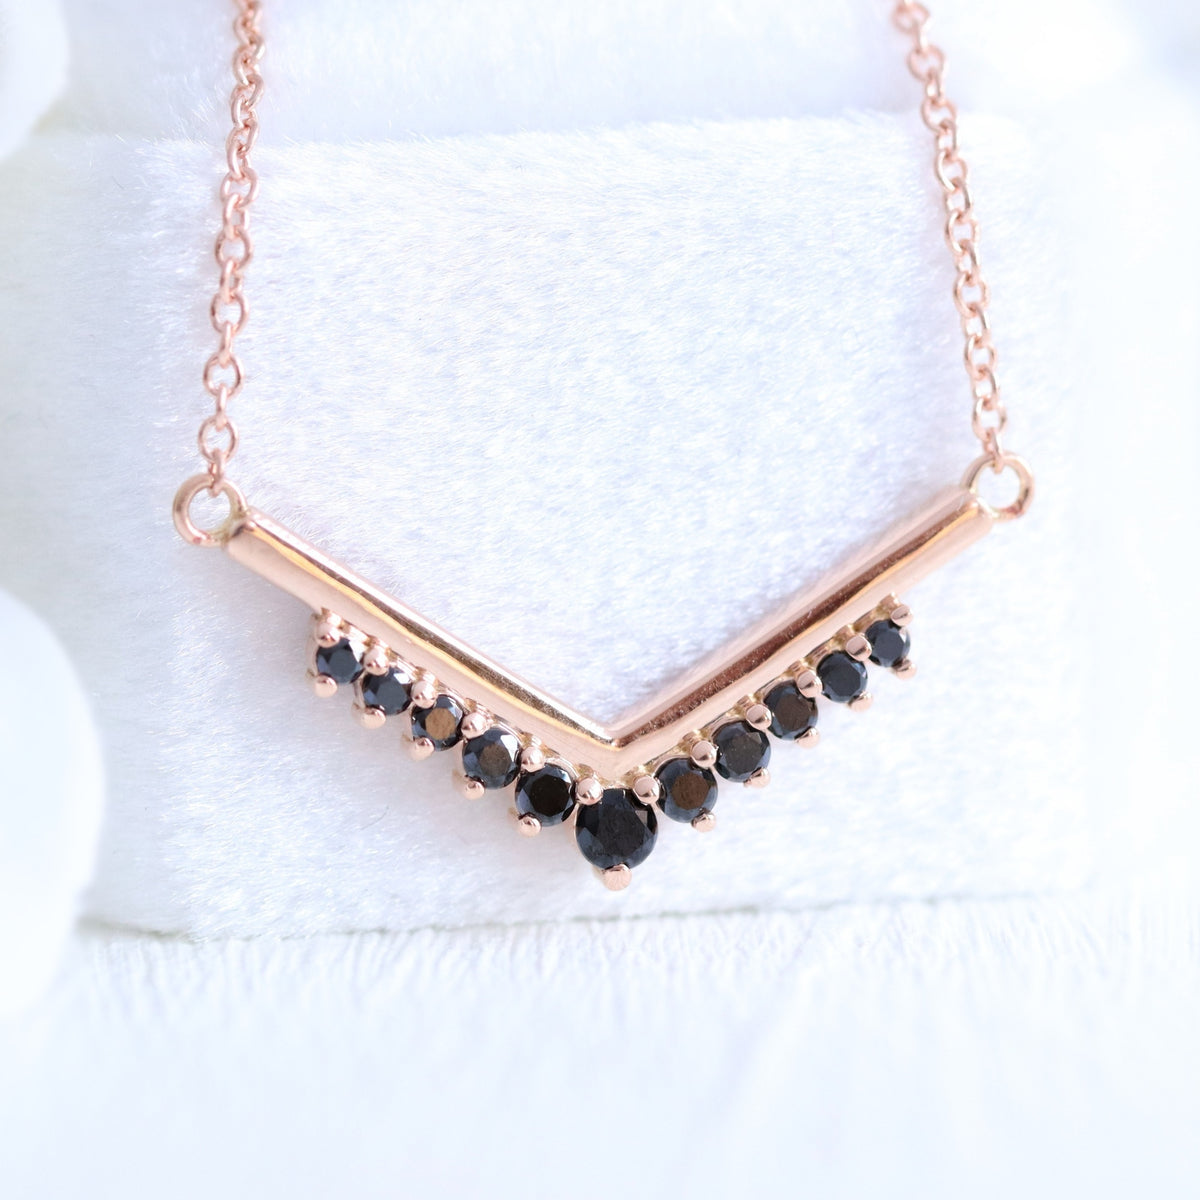 black diamond necklace rose gold V shaped drop pendant la more design jewelry